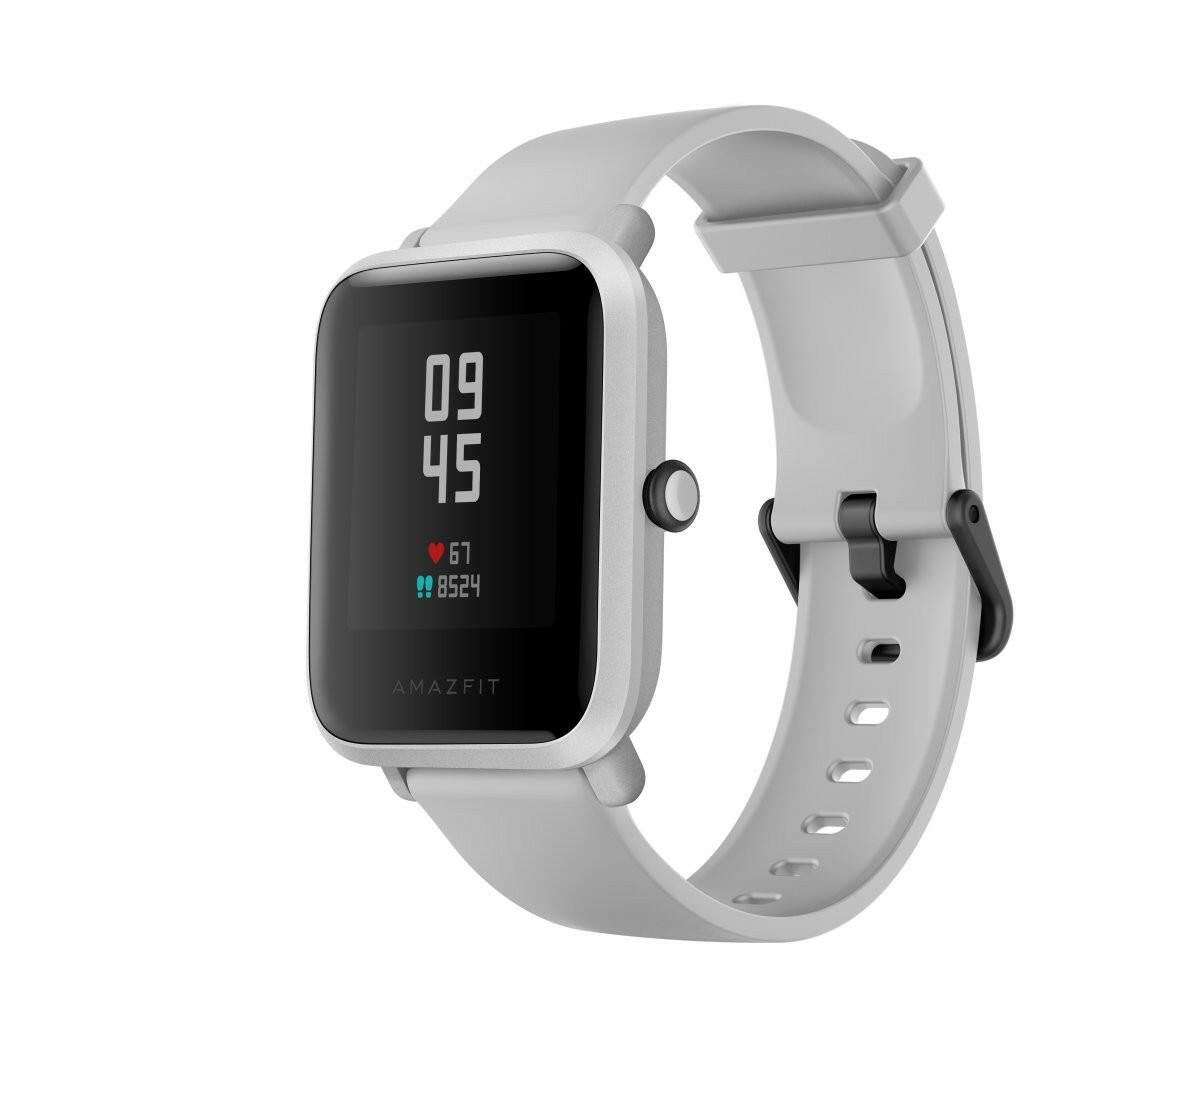 Buy Amazfit Bip S (Refurbished) Smart Watch @ ₹1499.0